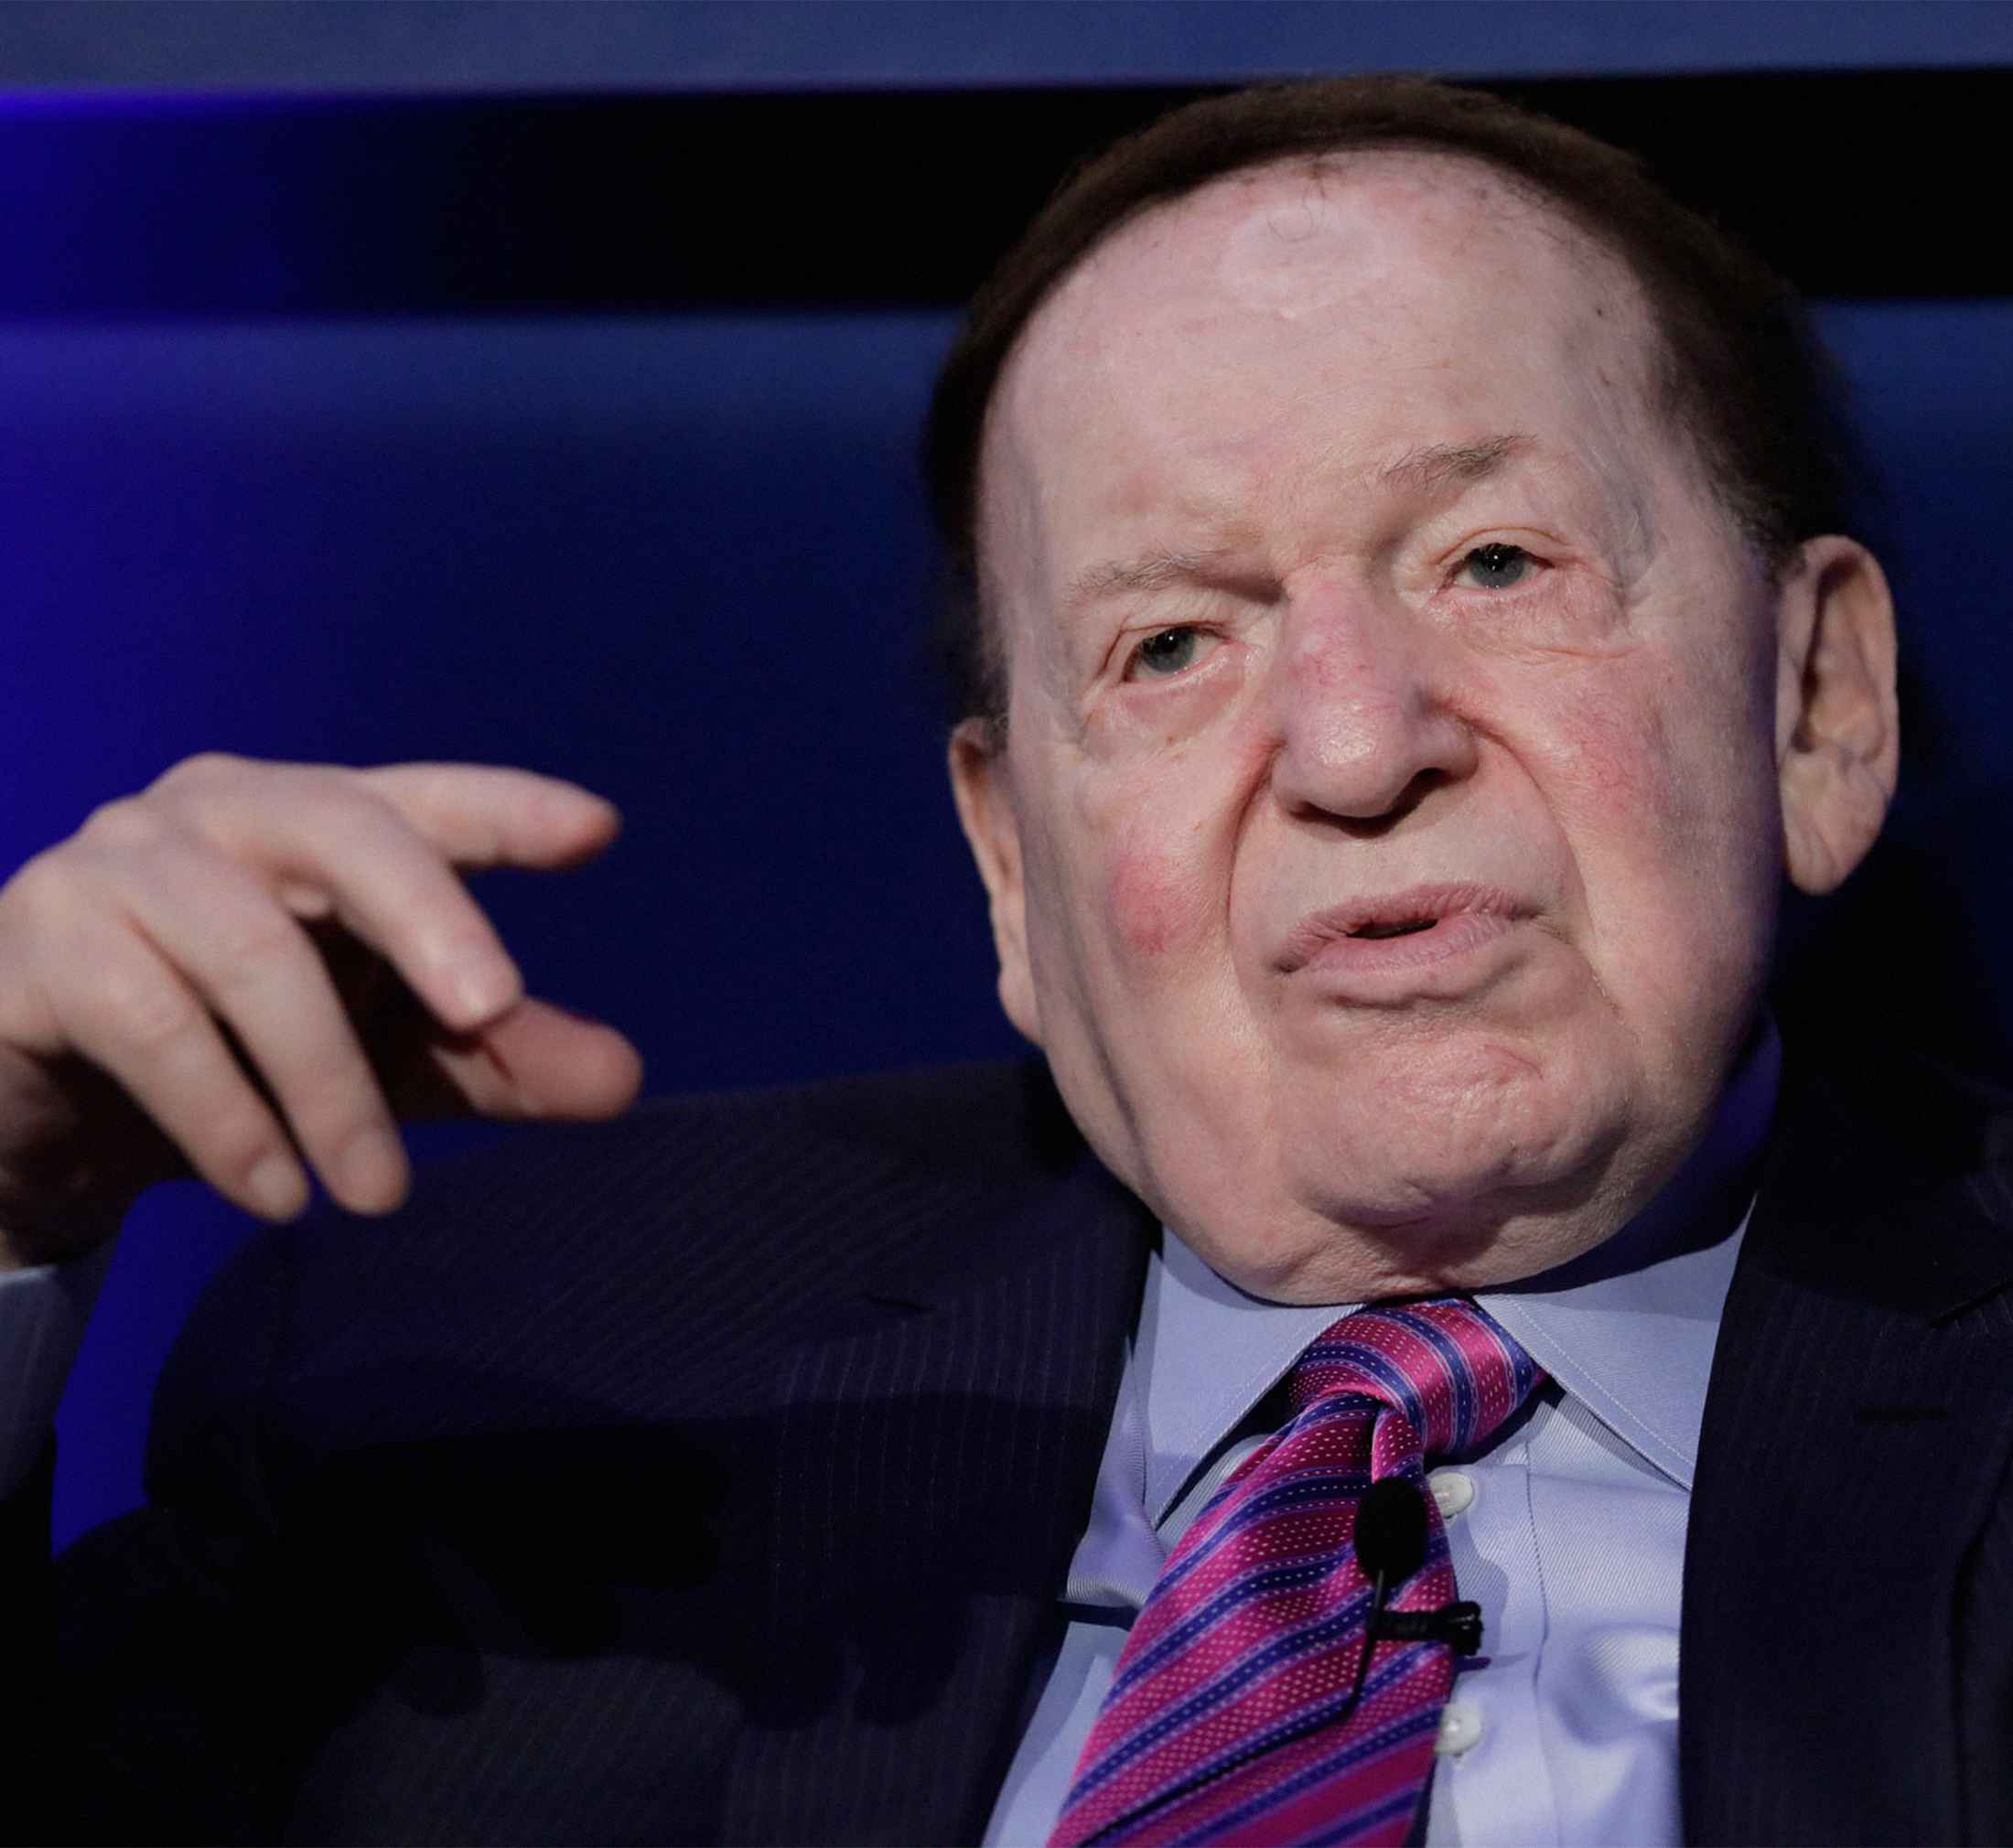 Adelson's Sands Weighs $6 Billion Sale of Las Vegas Casinos - Bloomberg